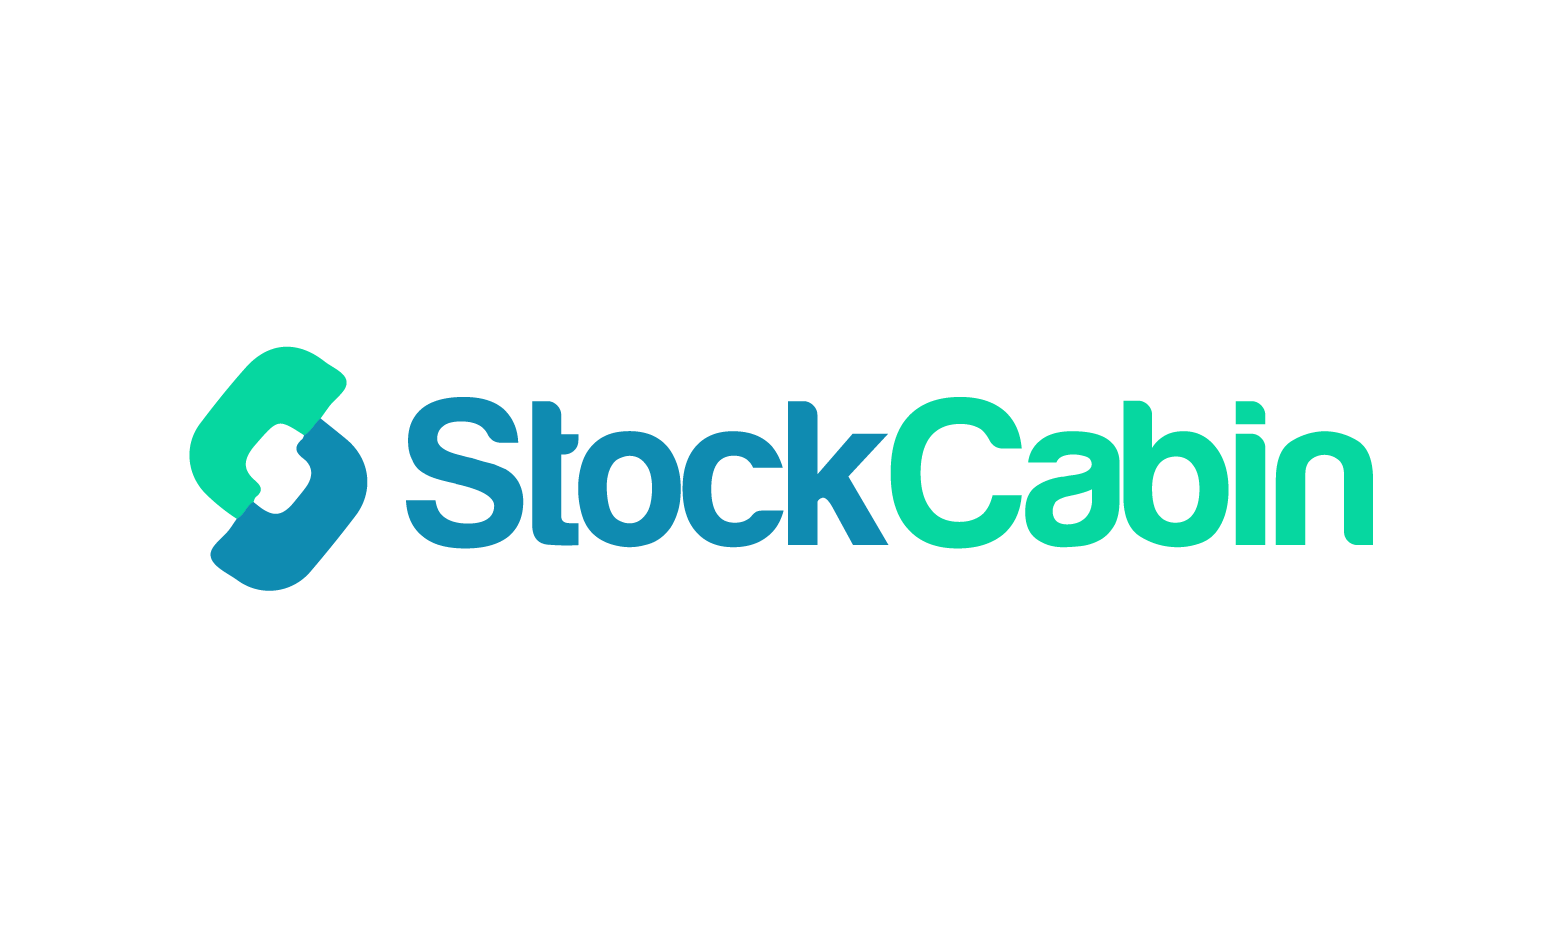 StockCabin.com - Creative brandable domain for sale